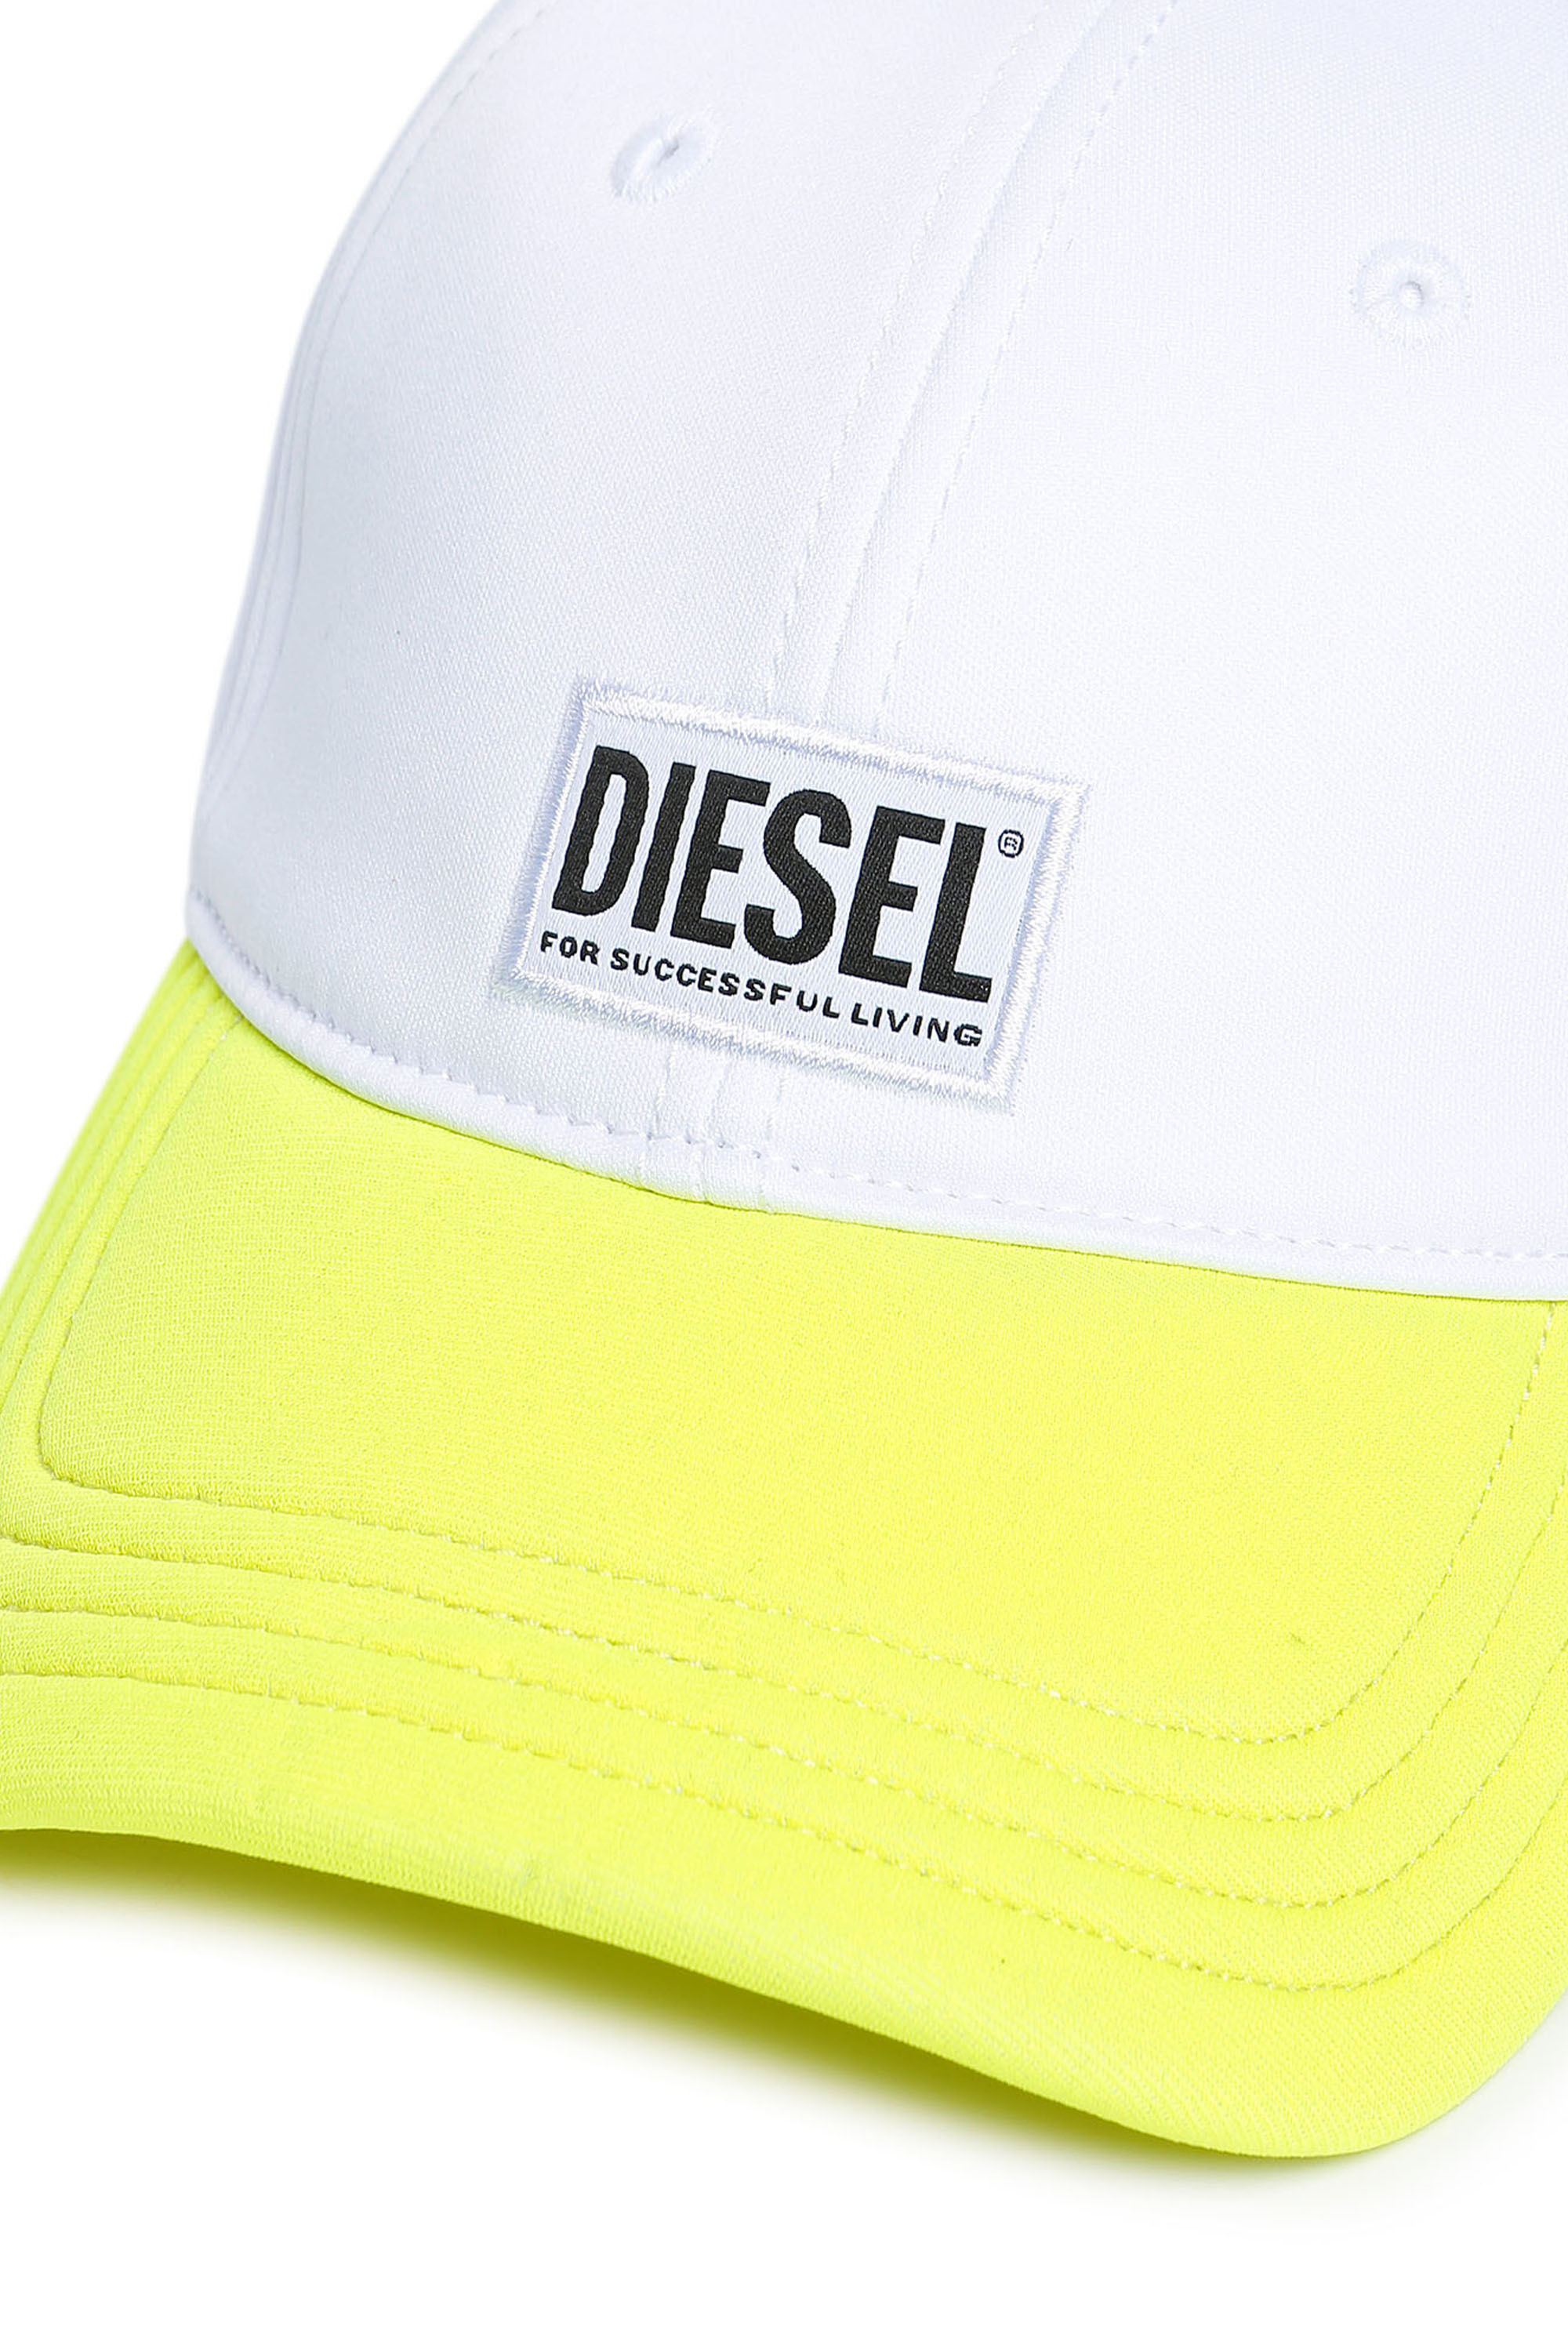 Diesel - FDURBO, ホワイト/イエロー - Image 3